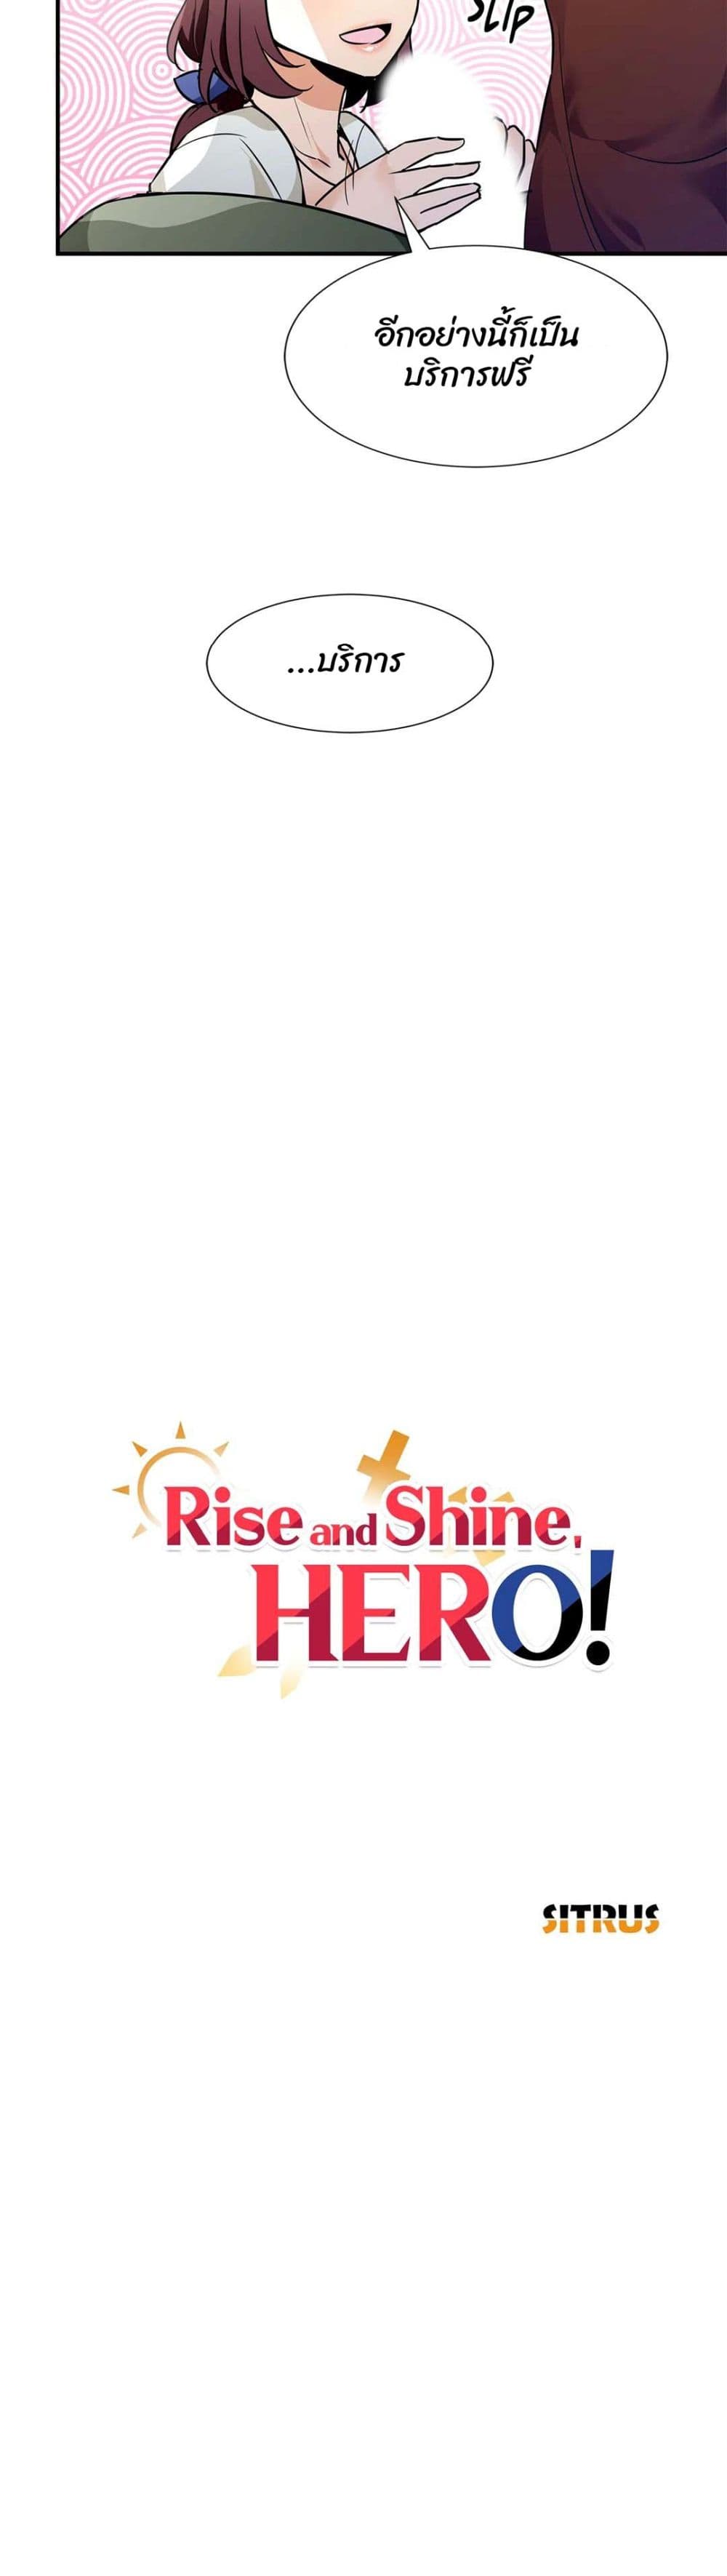 Rise and Shine, Hero! 19-19